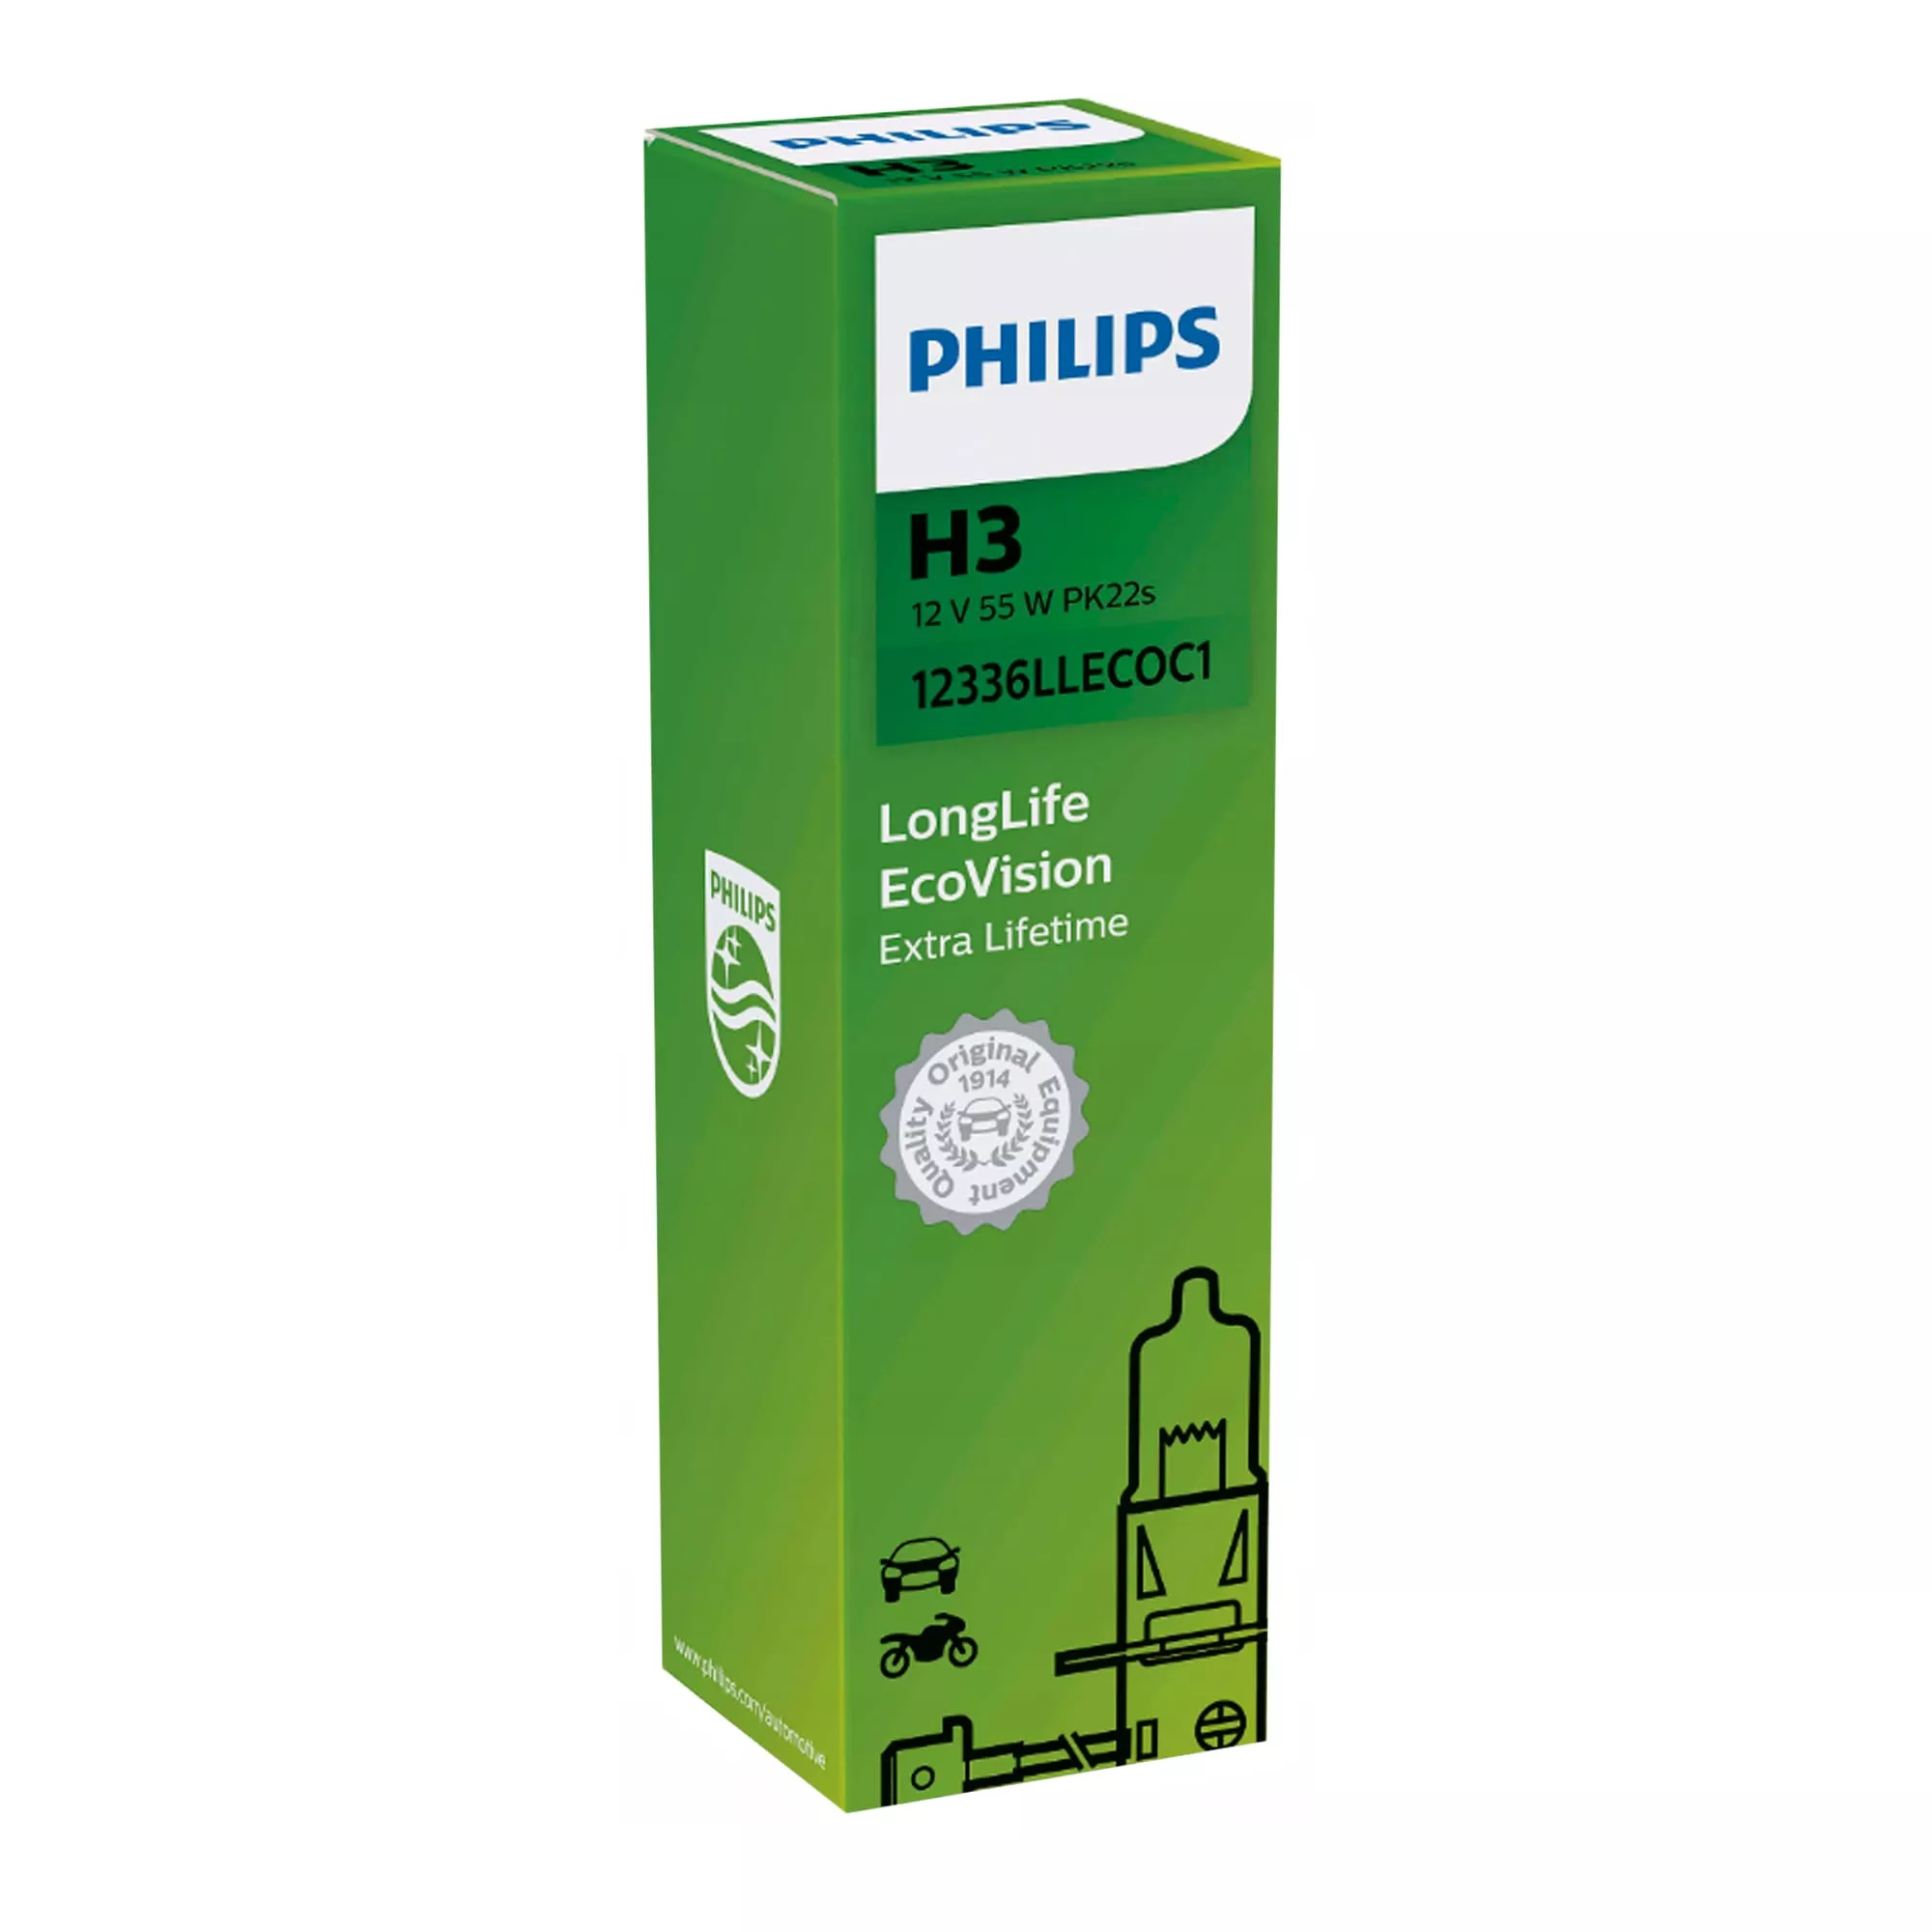 Лампа Philips LongLife H3 12V 55W 12336 LLECO C1